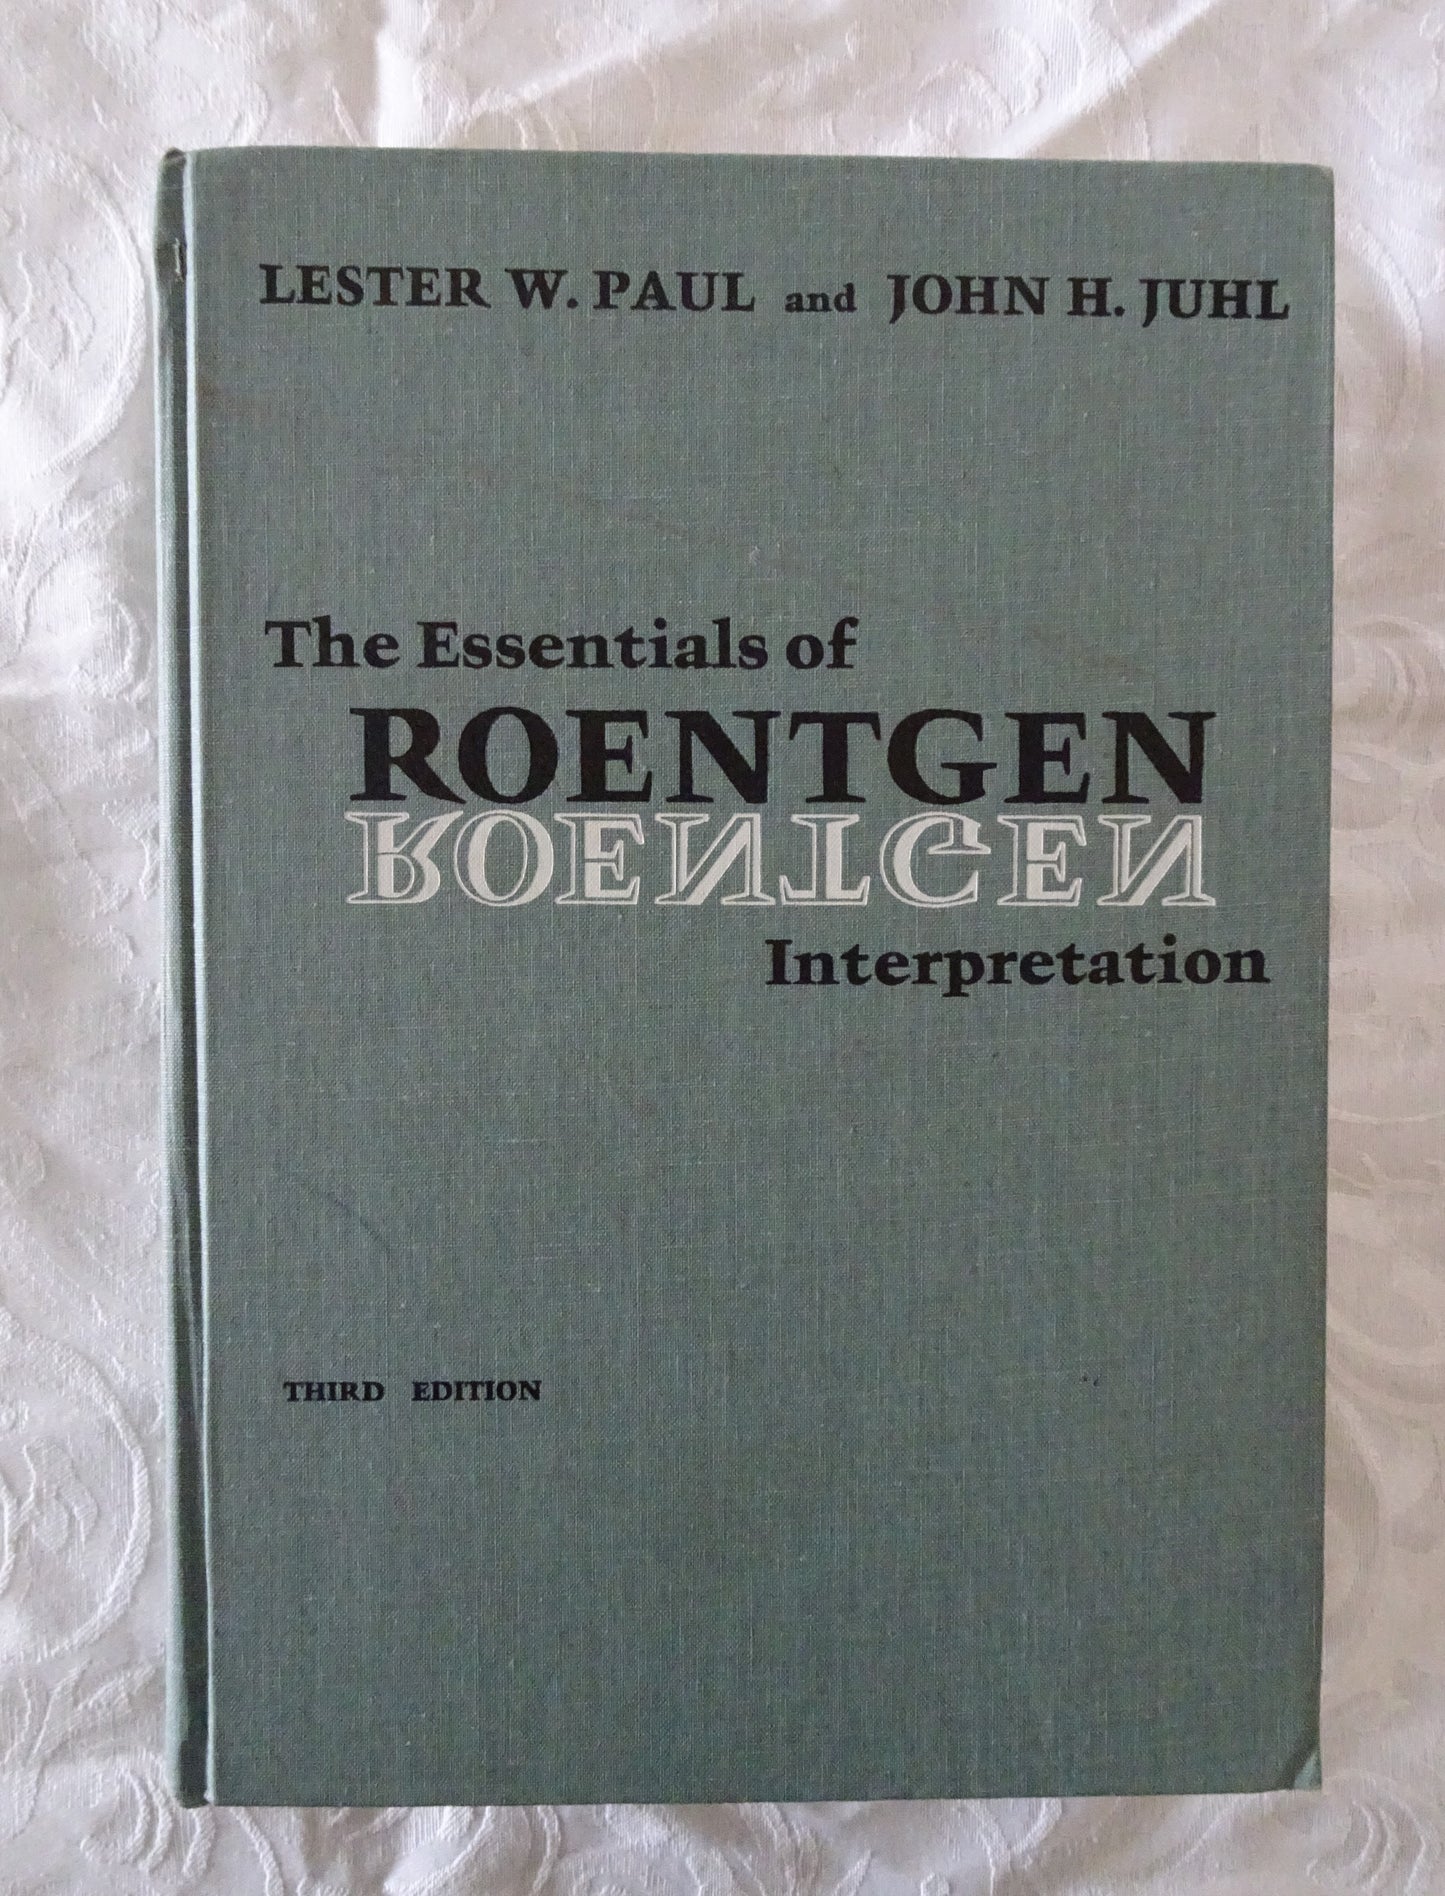 The Essentials of Roentgen Interpretation by Lester W. Paul and John H. Juhl